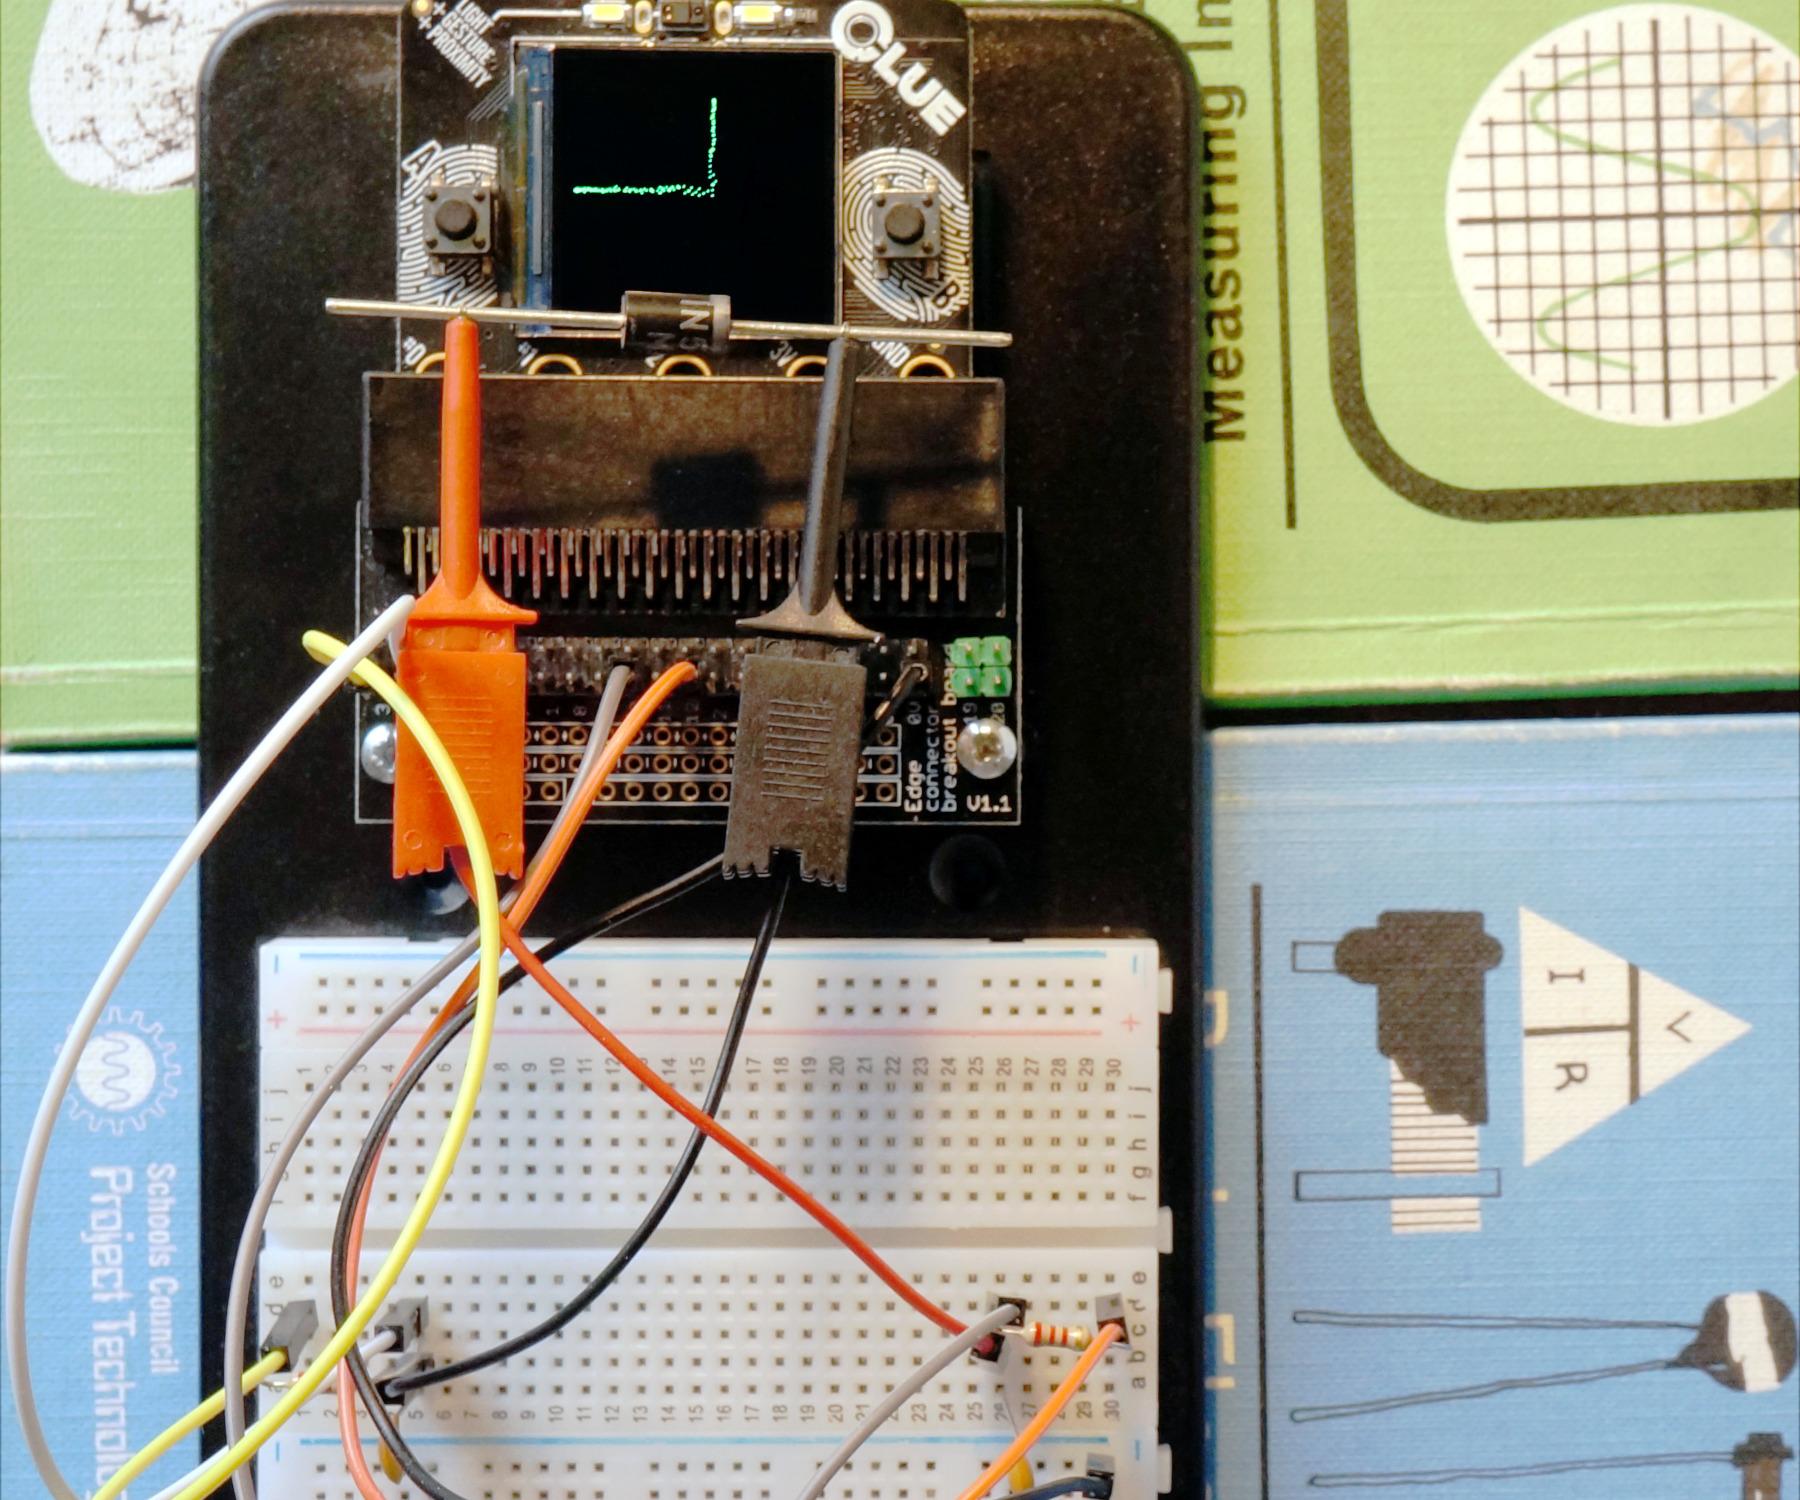 clue-component-tester-incbreadboard-powerdiode-liveview1-1800x1500.jpg